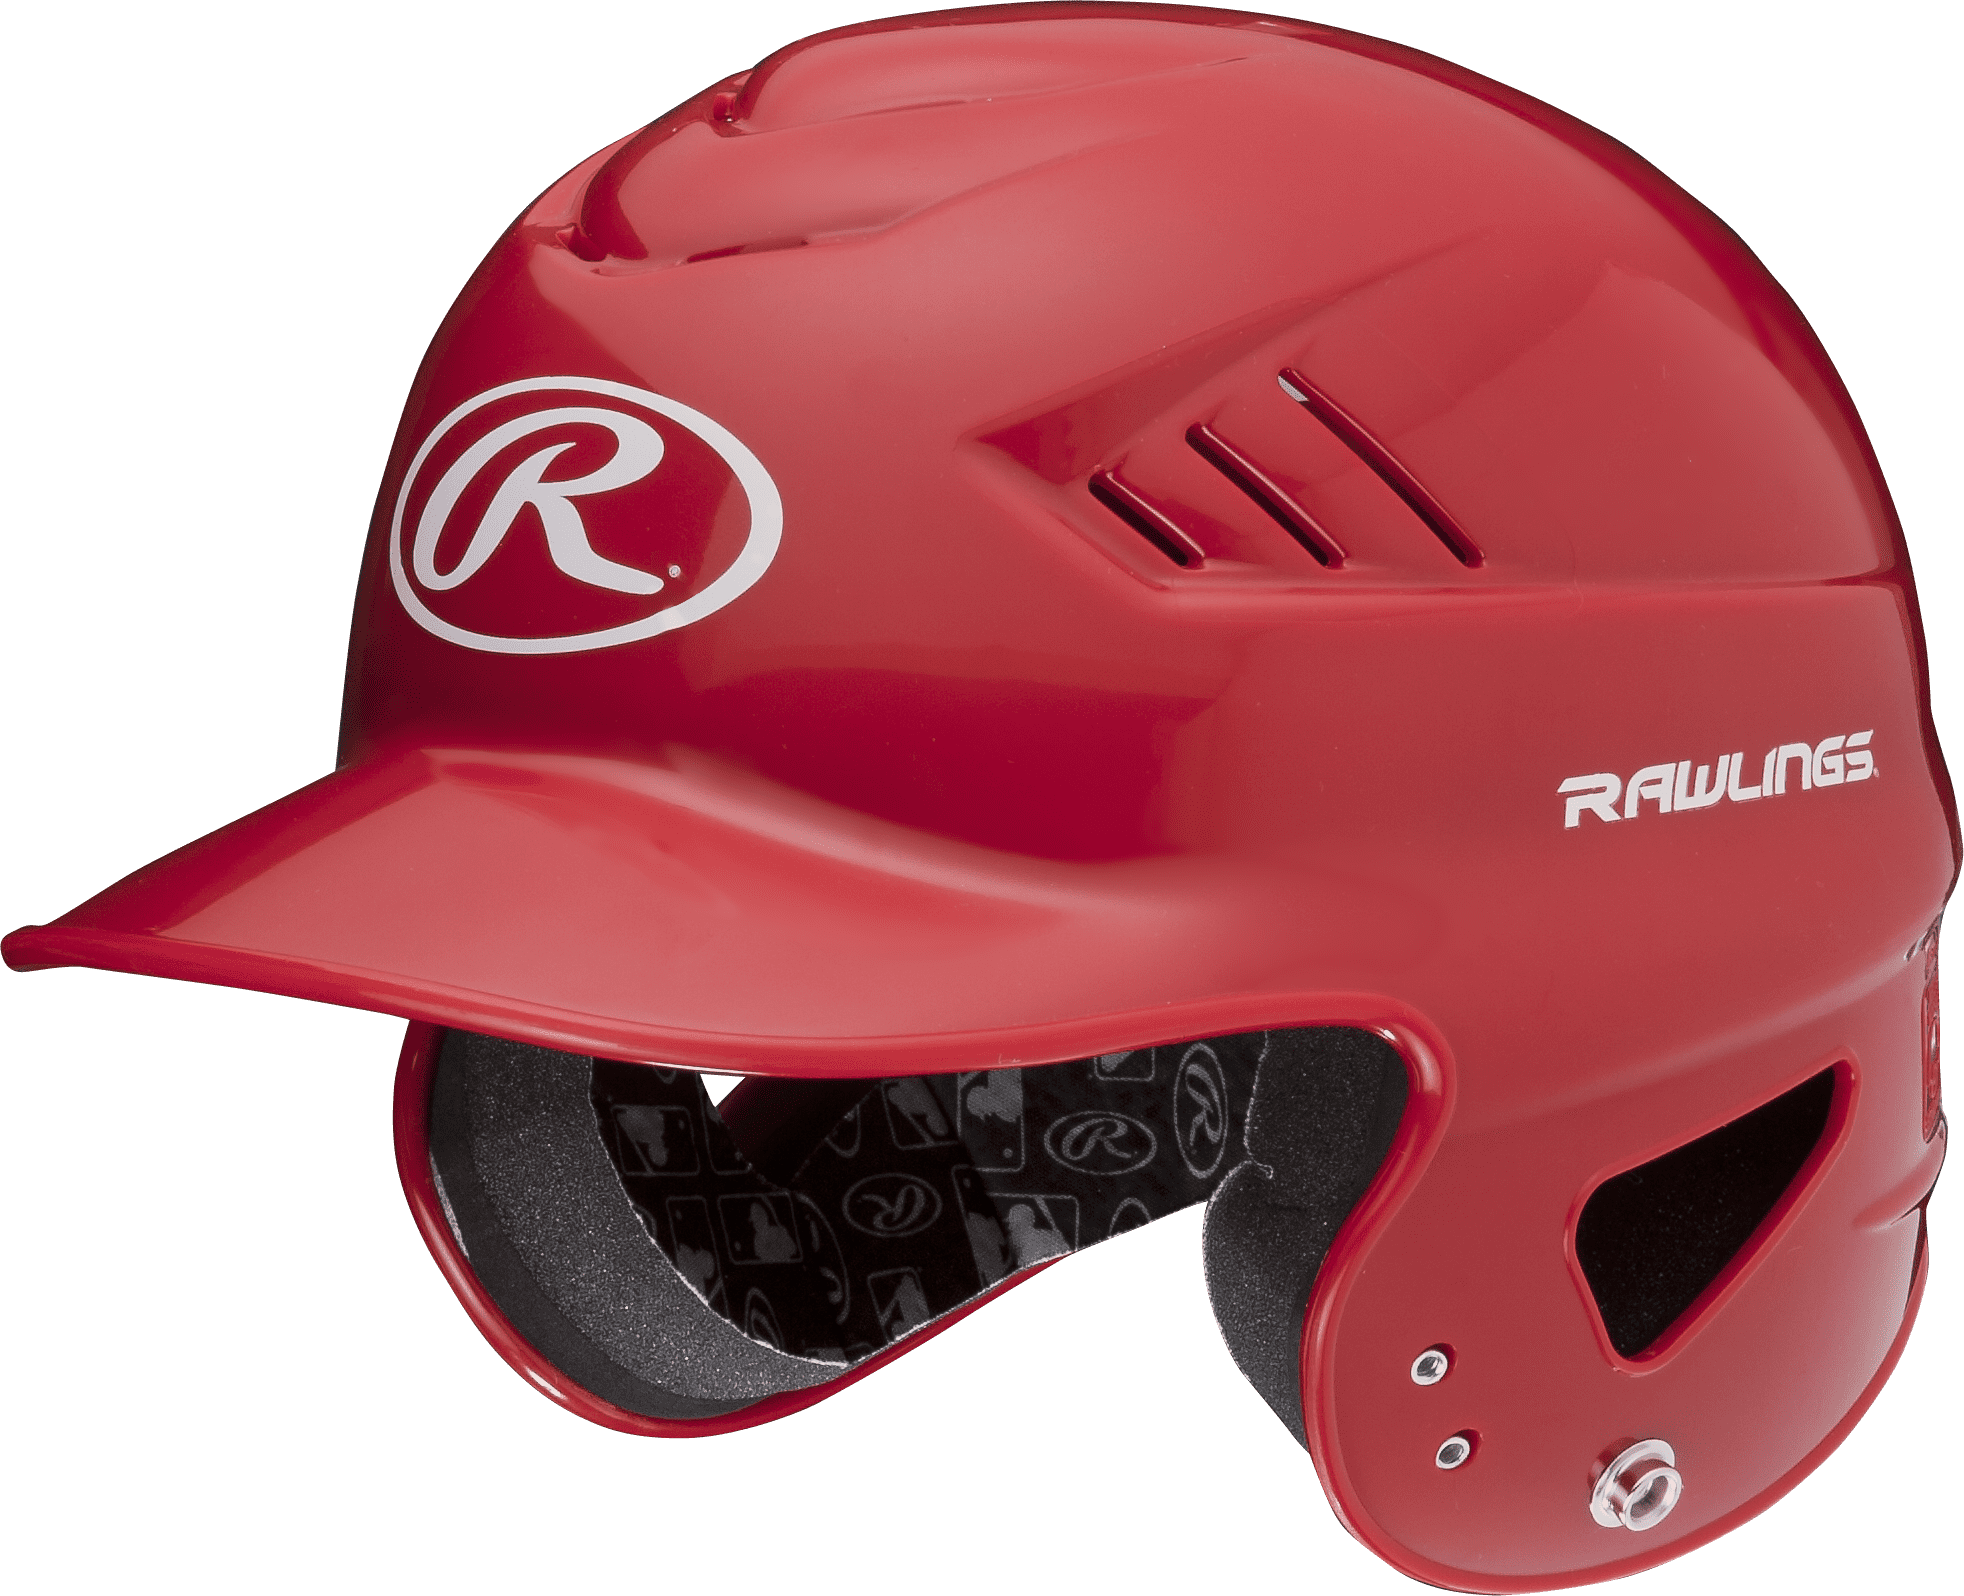 Rawlings Coolflo Youth Tball Batting Helmet 